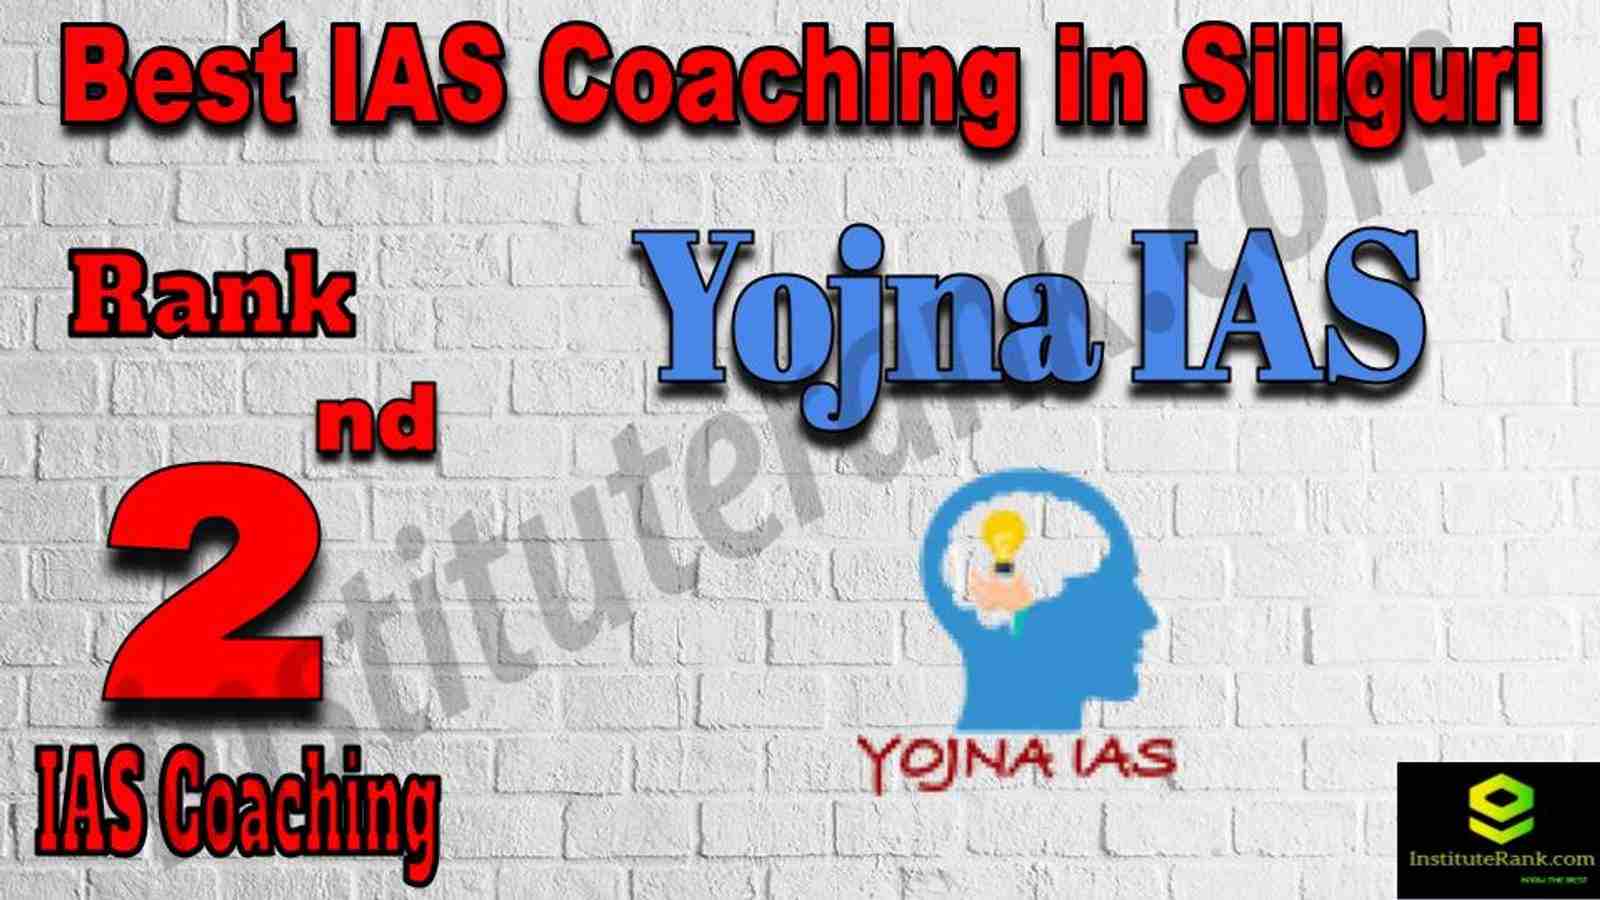 2nd Best IAS Coaching in Siliguri